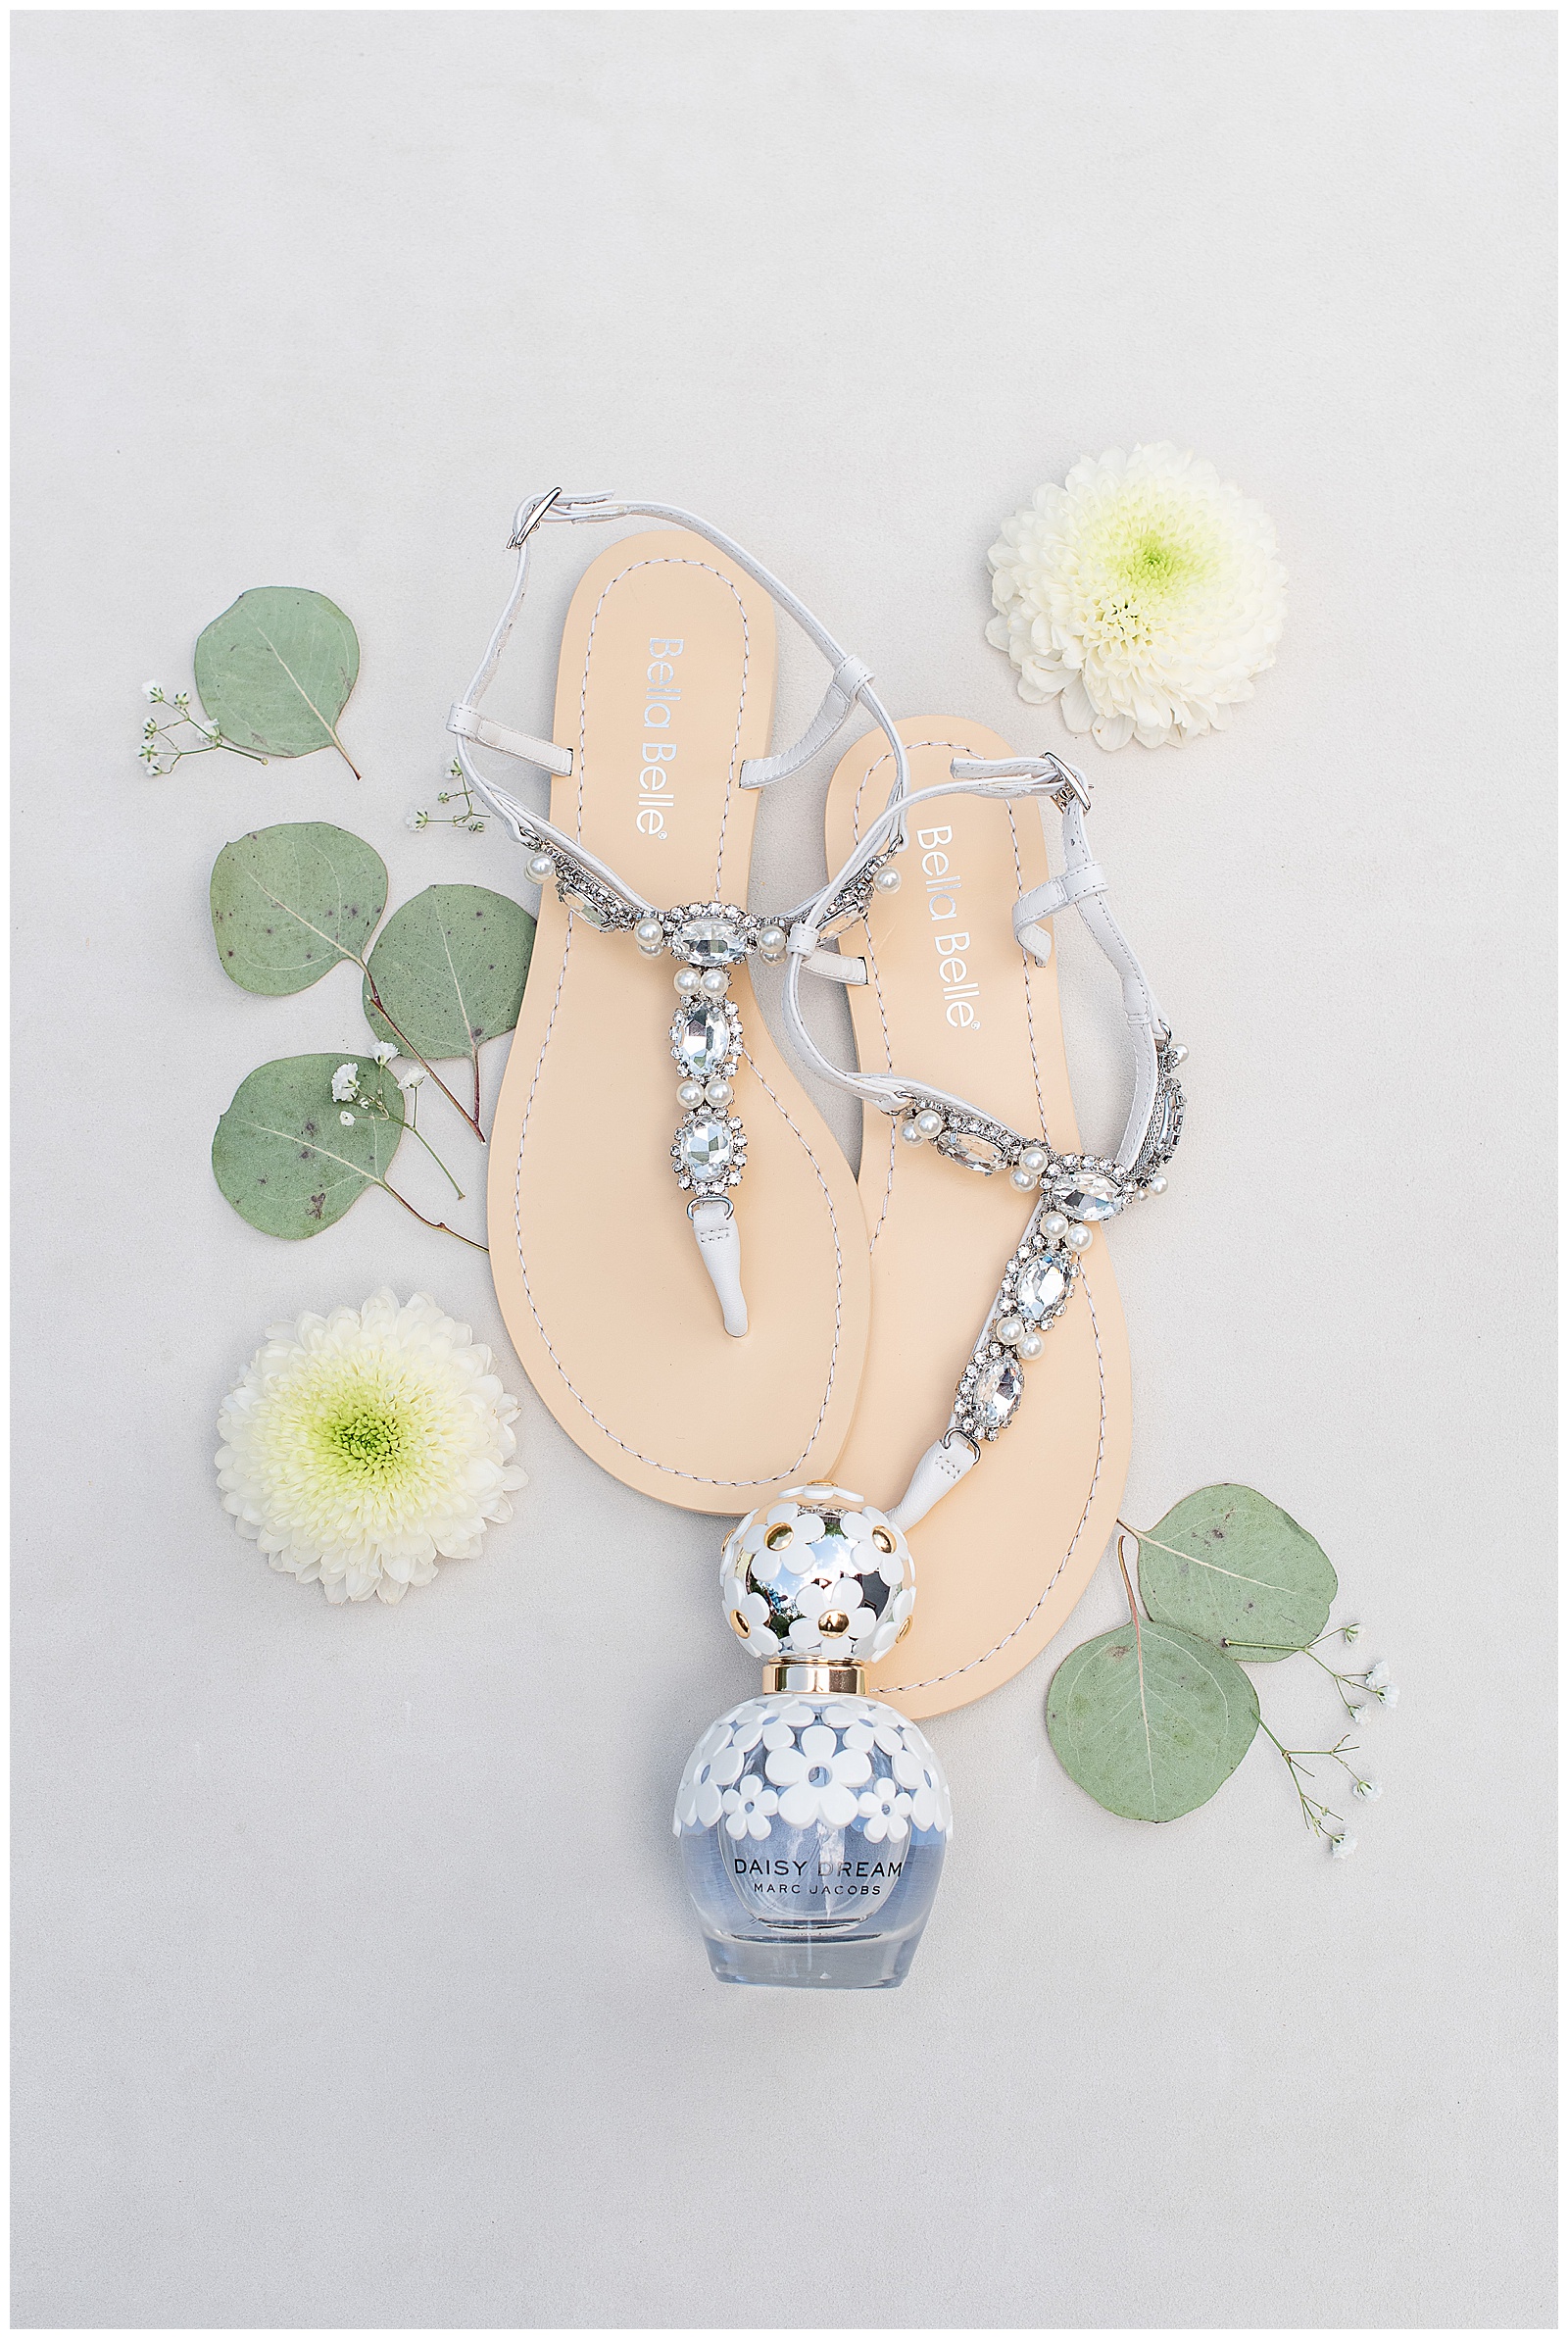 bridal details of bella belle shoes and perfume bottle